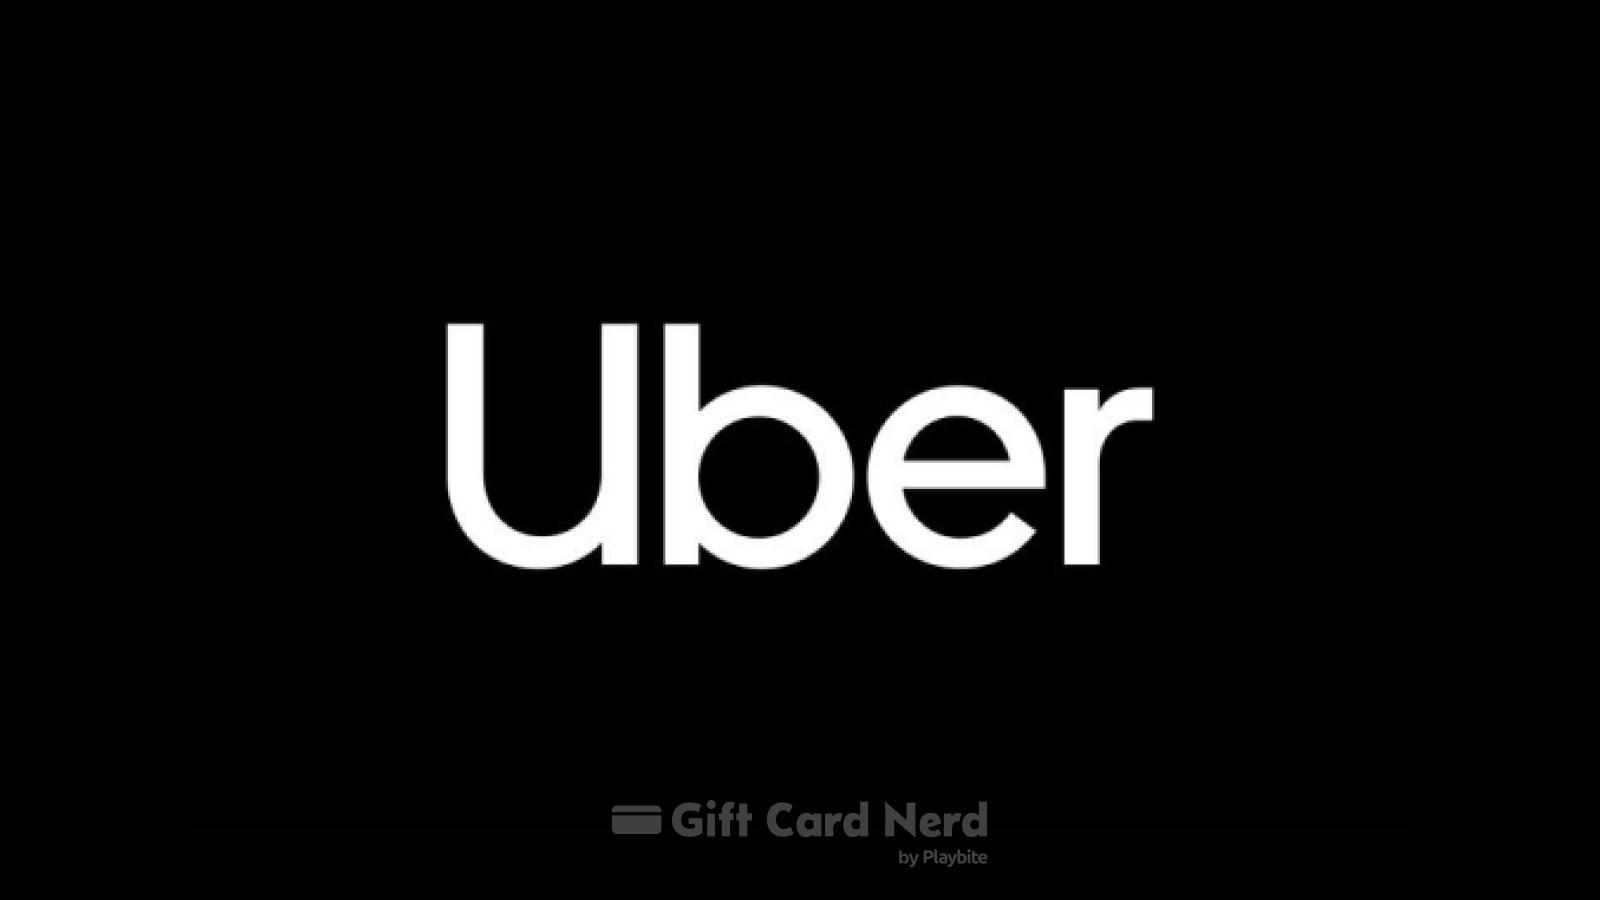 Can I Use an Uber Gift Card on Grubhub?